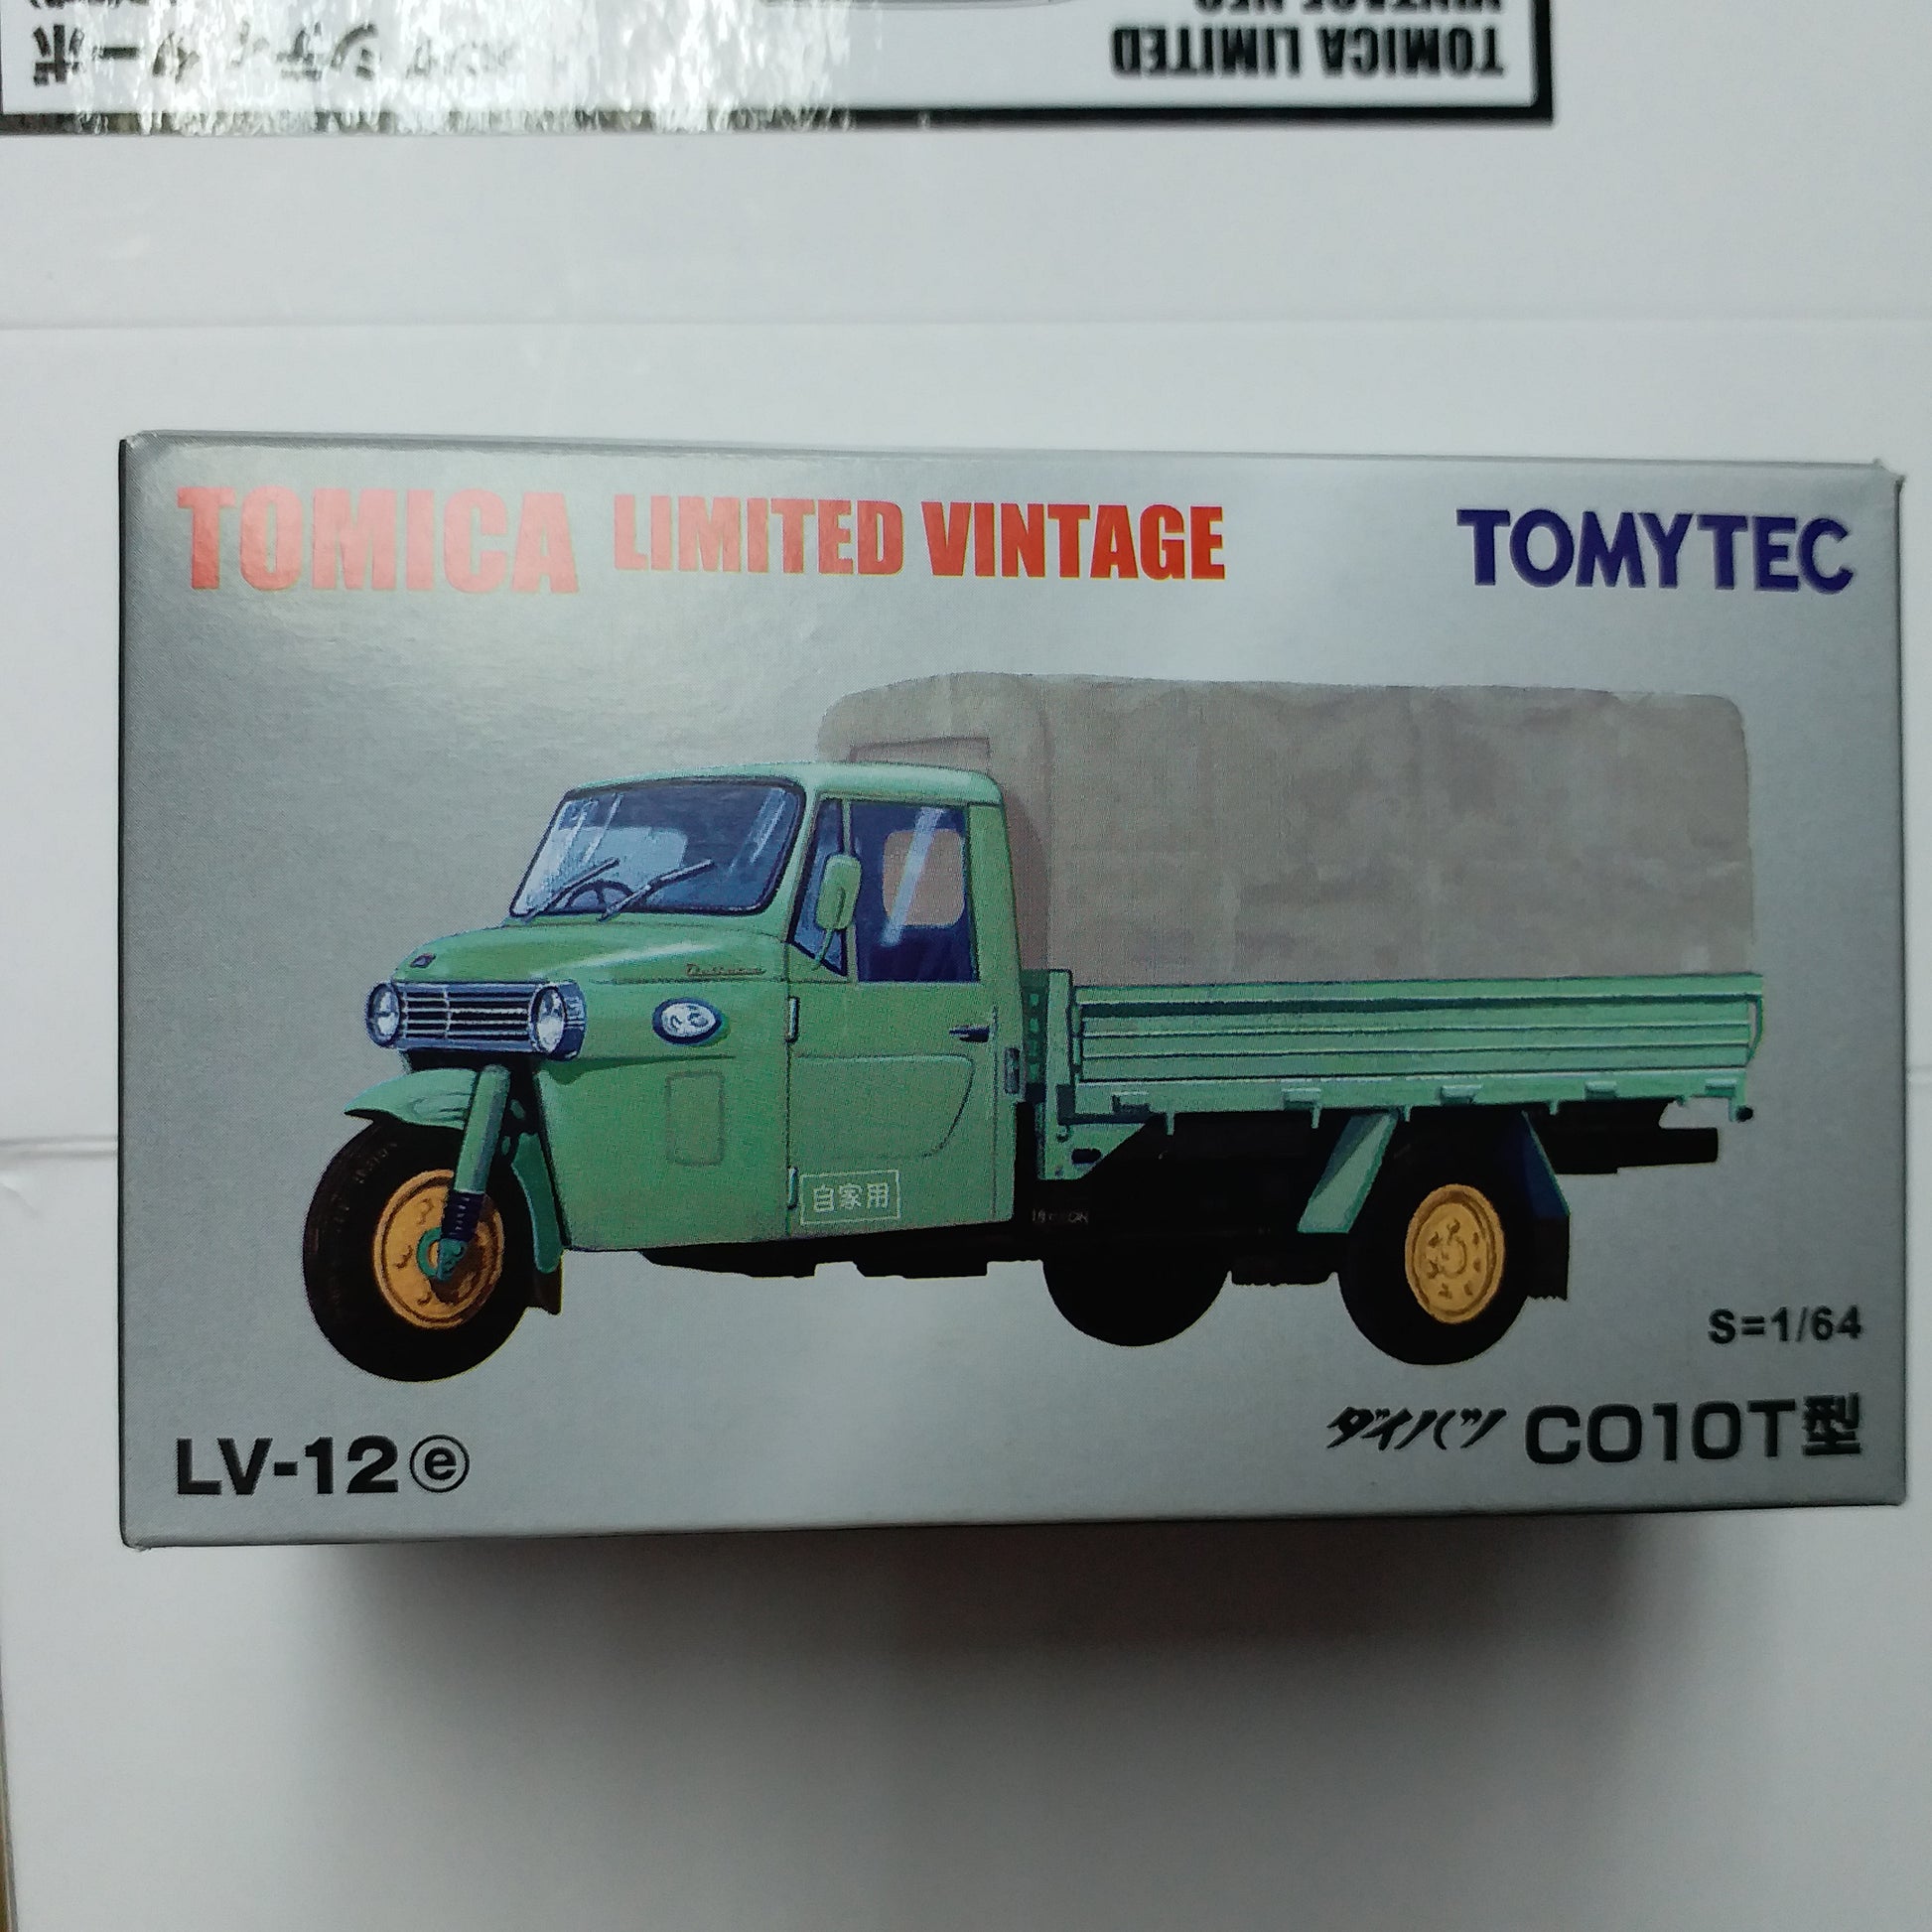 Tomica Limited Vintage LV-12e Daihatsu CO10T Takara Tomy